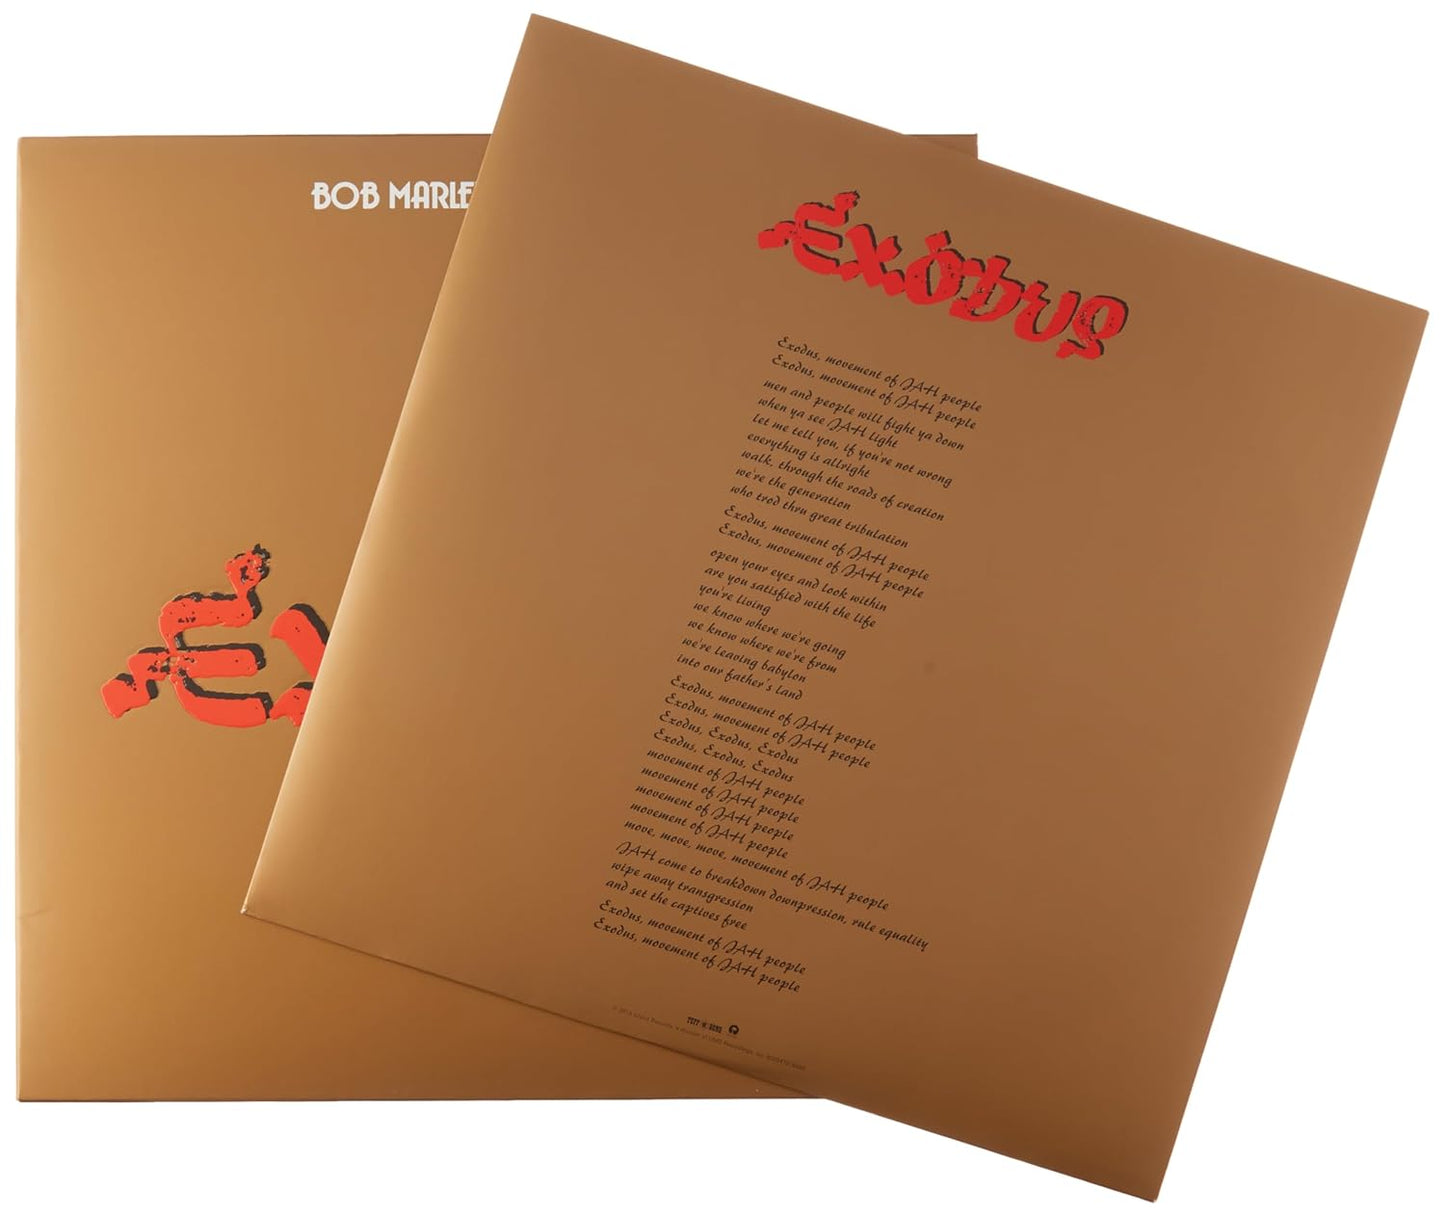 Exodus - Bob Marley & The Walters - Vinyl